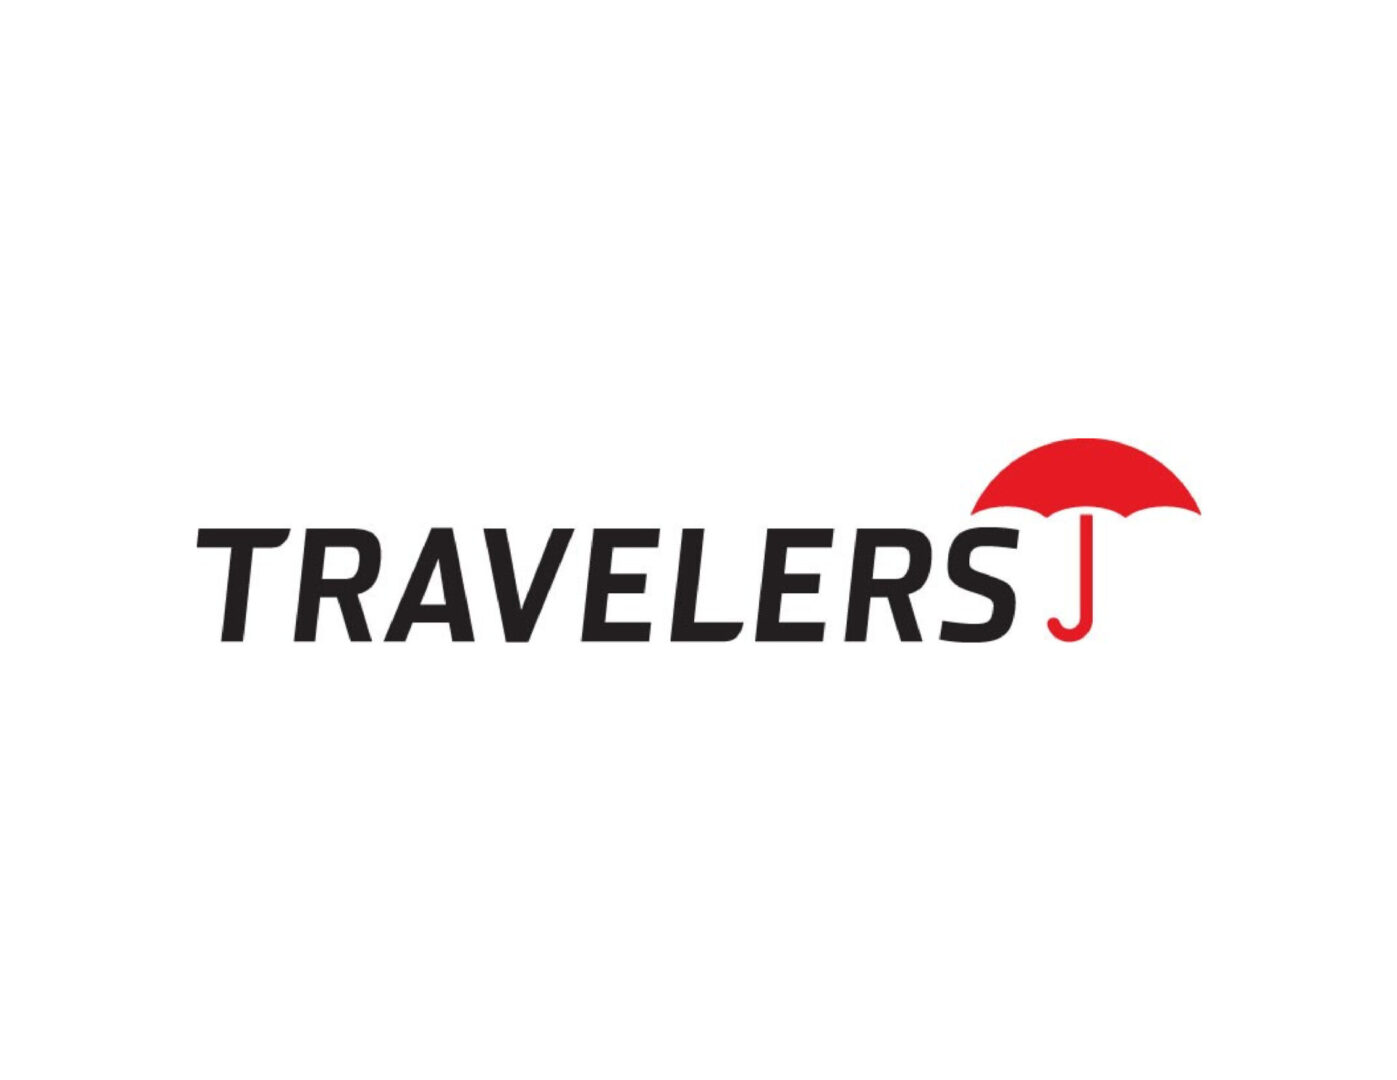 Travelers illustration on a white background